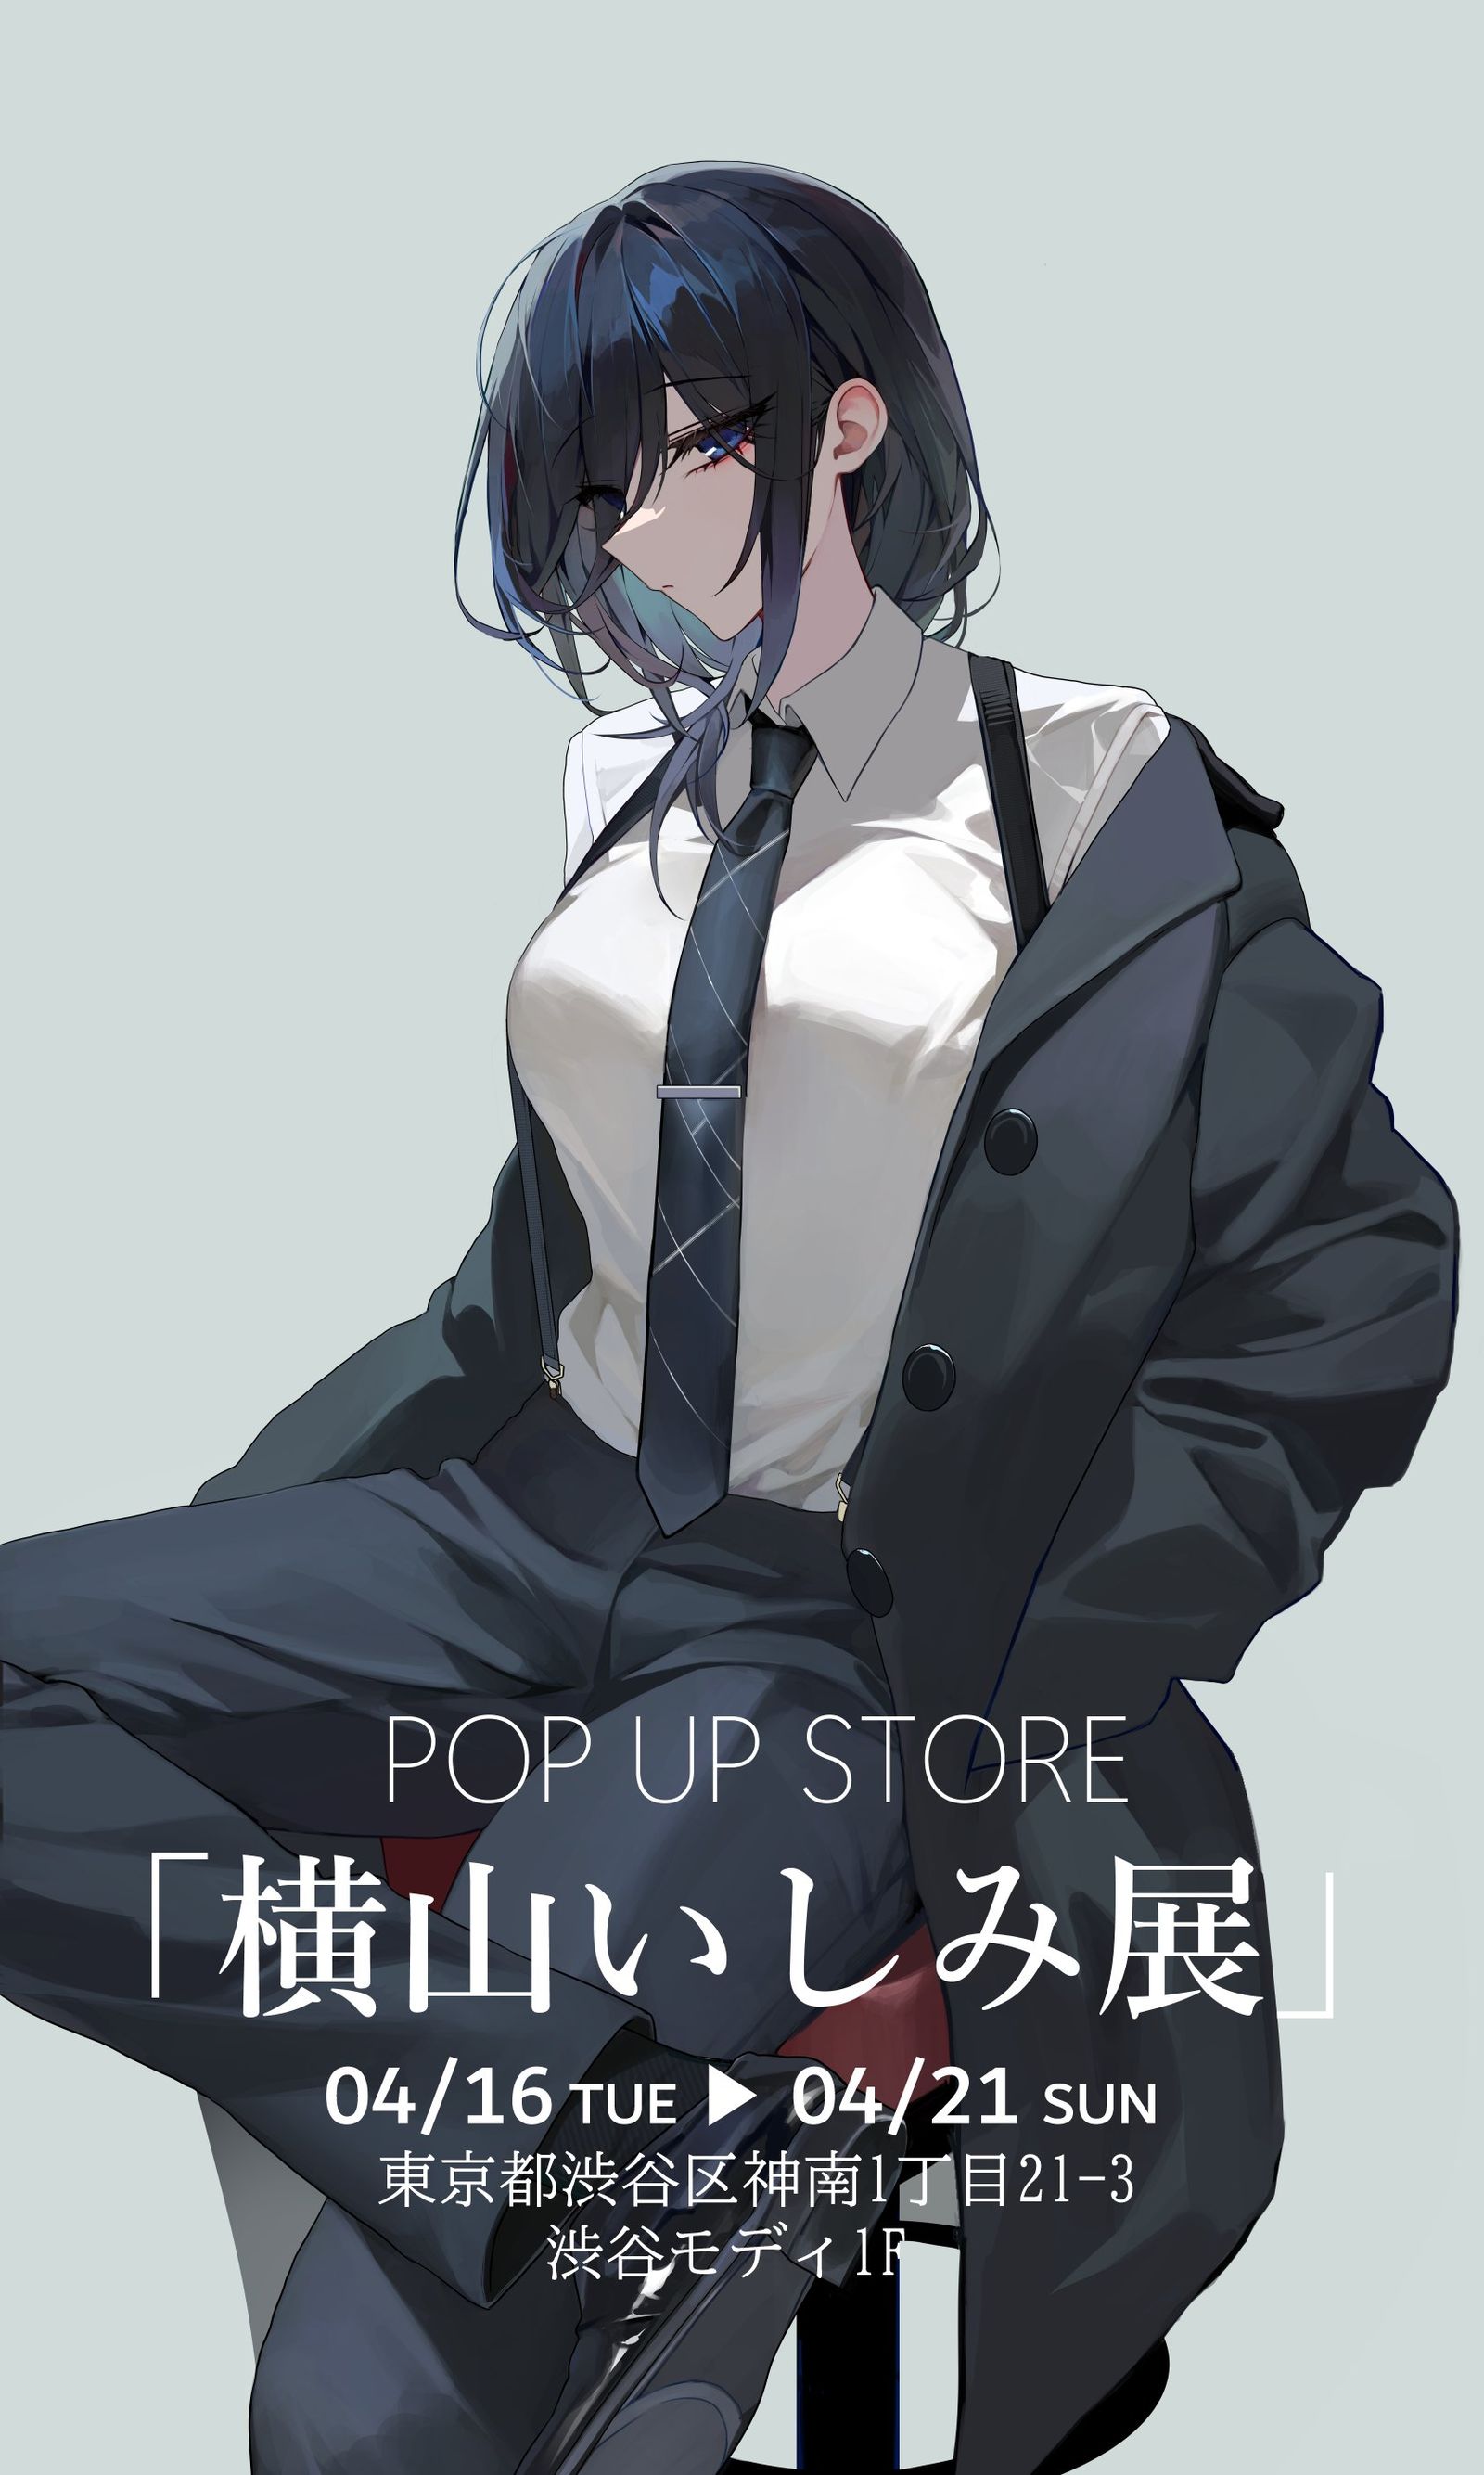 POP UP STORE“横山快乐展”